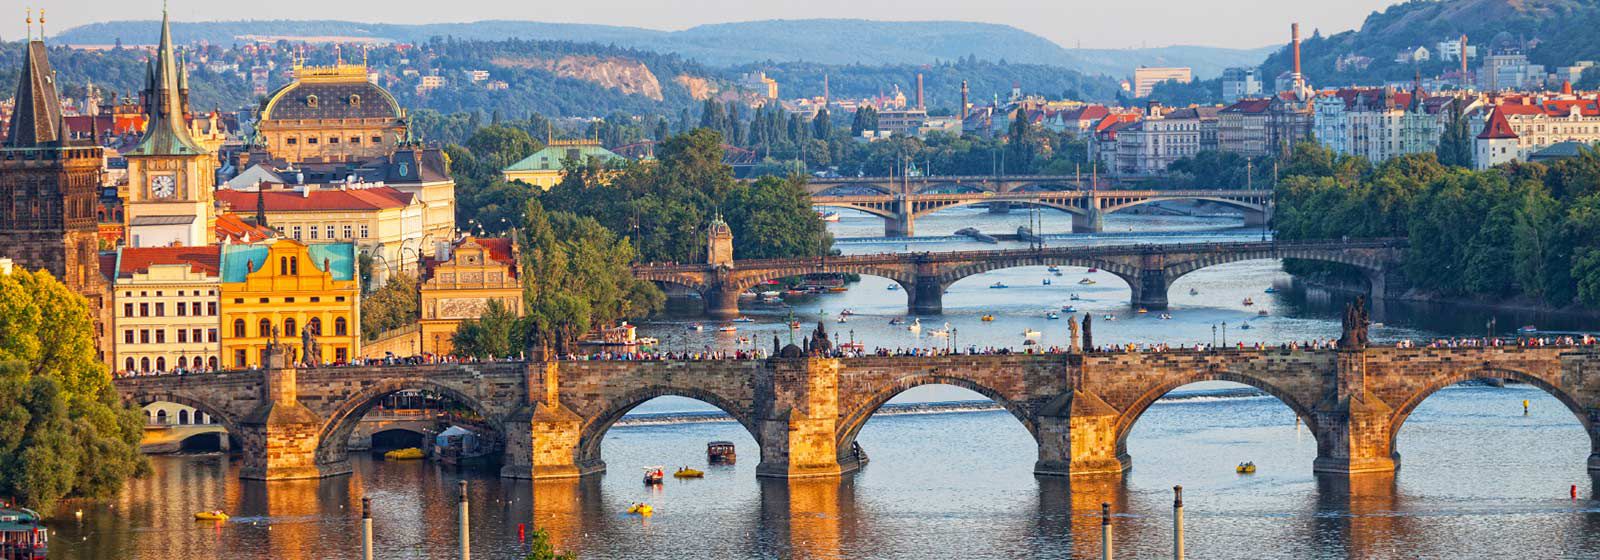 View of Prague and 4 bridges